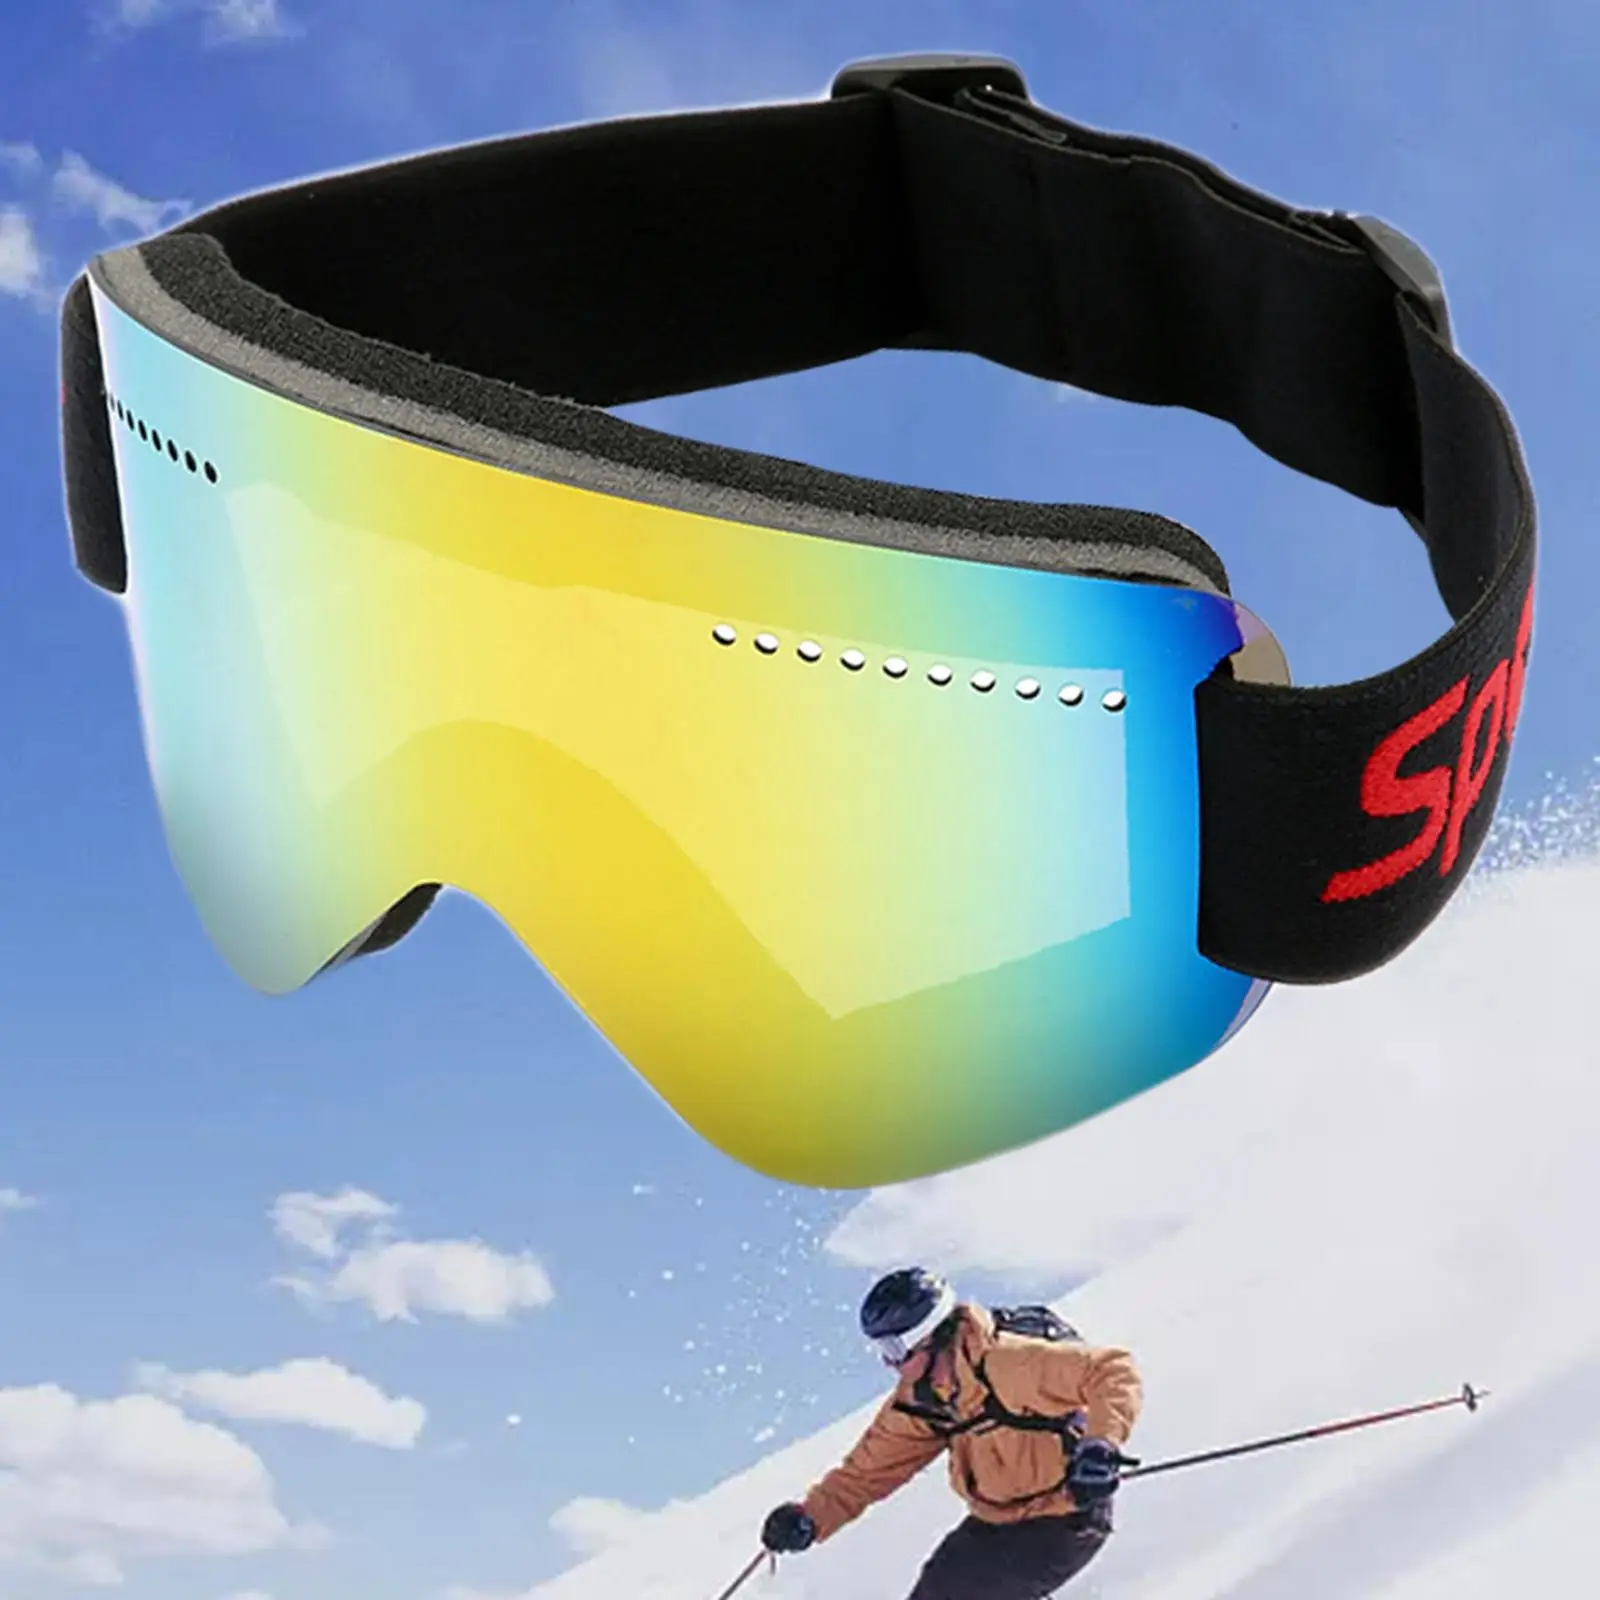 Ski Goggles, Winter  Snowboard Goggles with Anti-Fog  for Men Women Snowmobile Skiing Skating